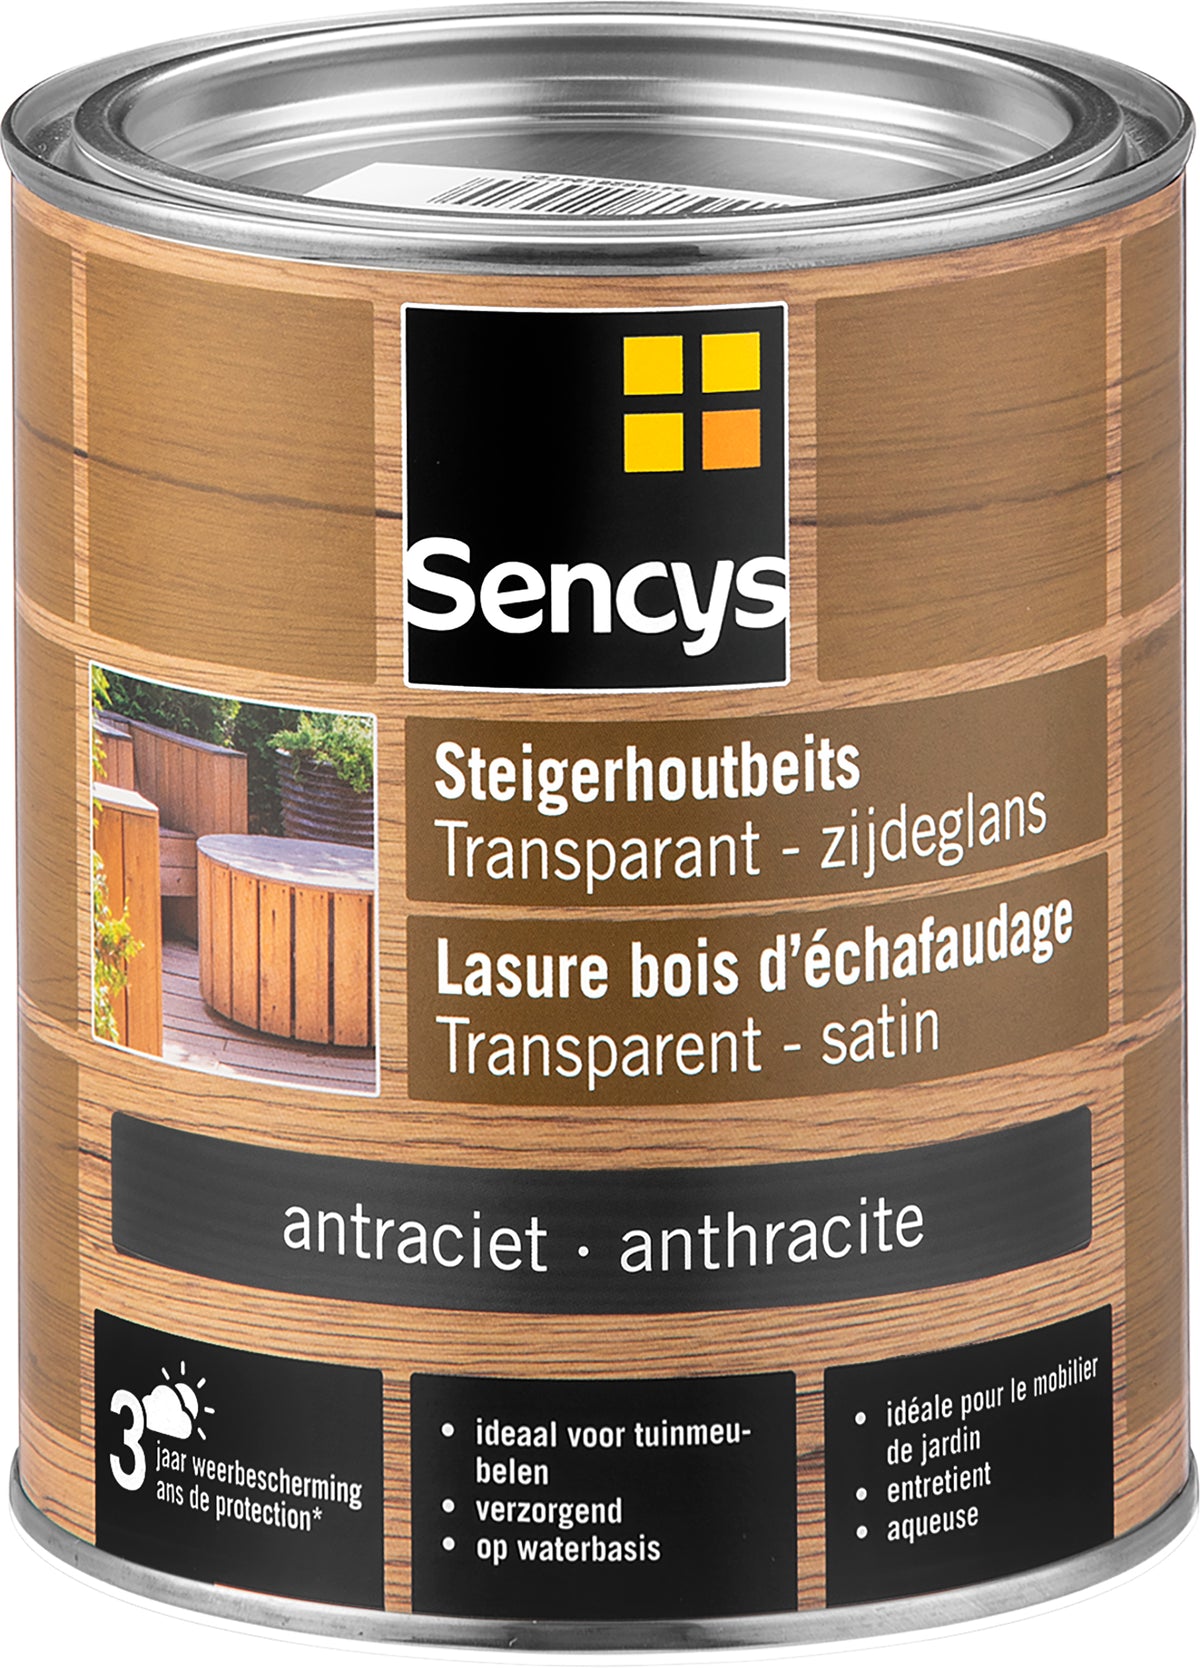 Sencys steigerhoutbeits transparant antraciet 750ml